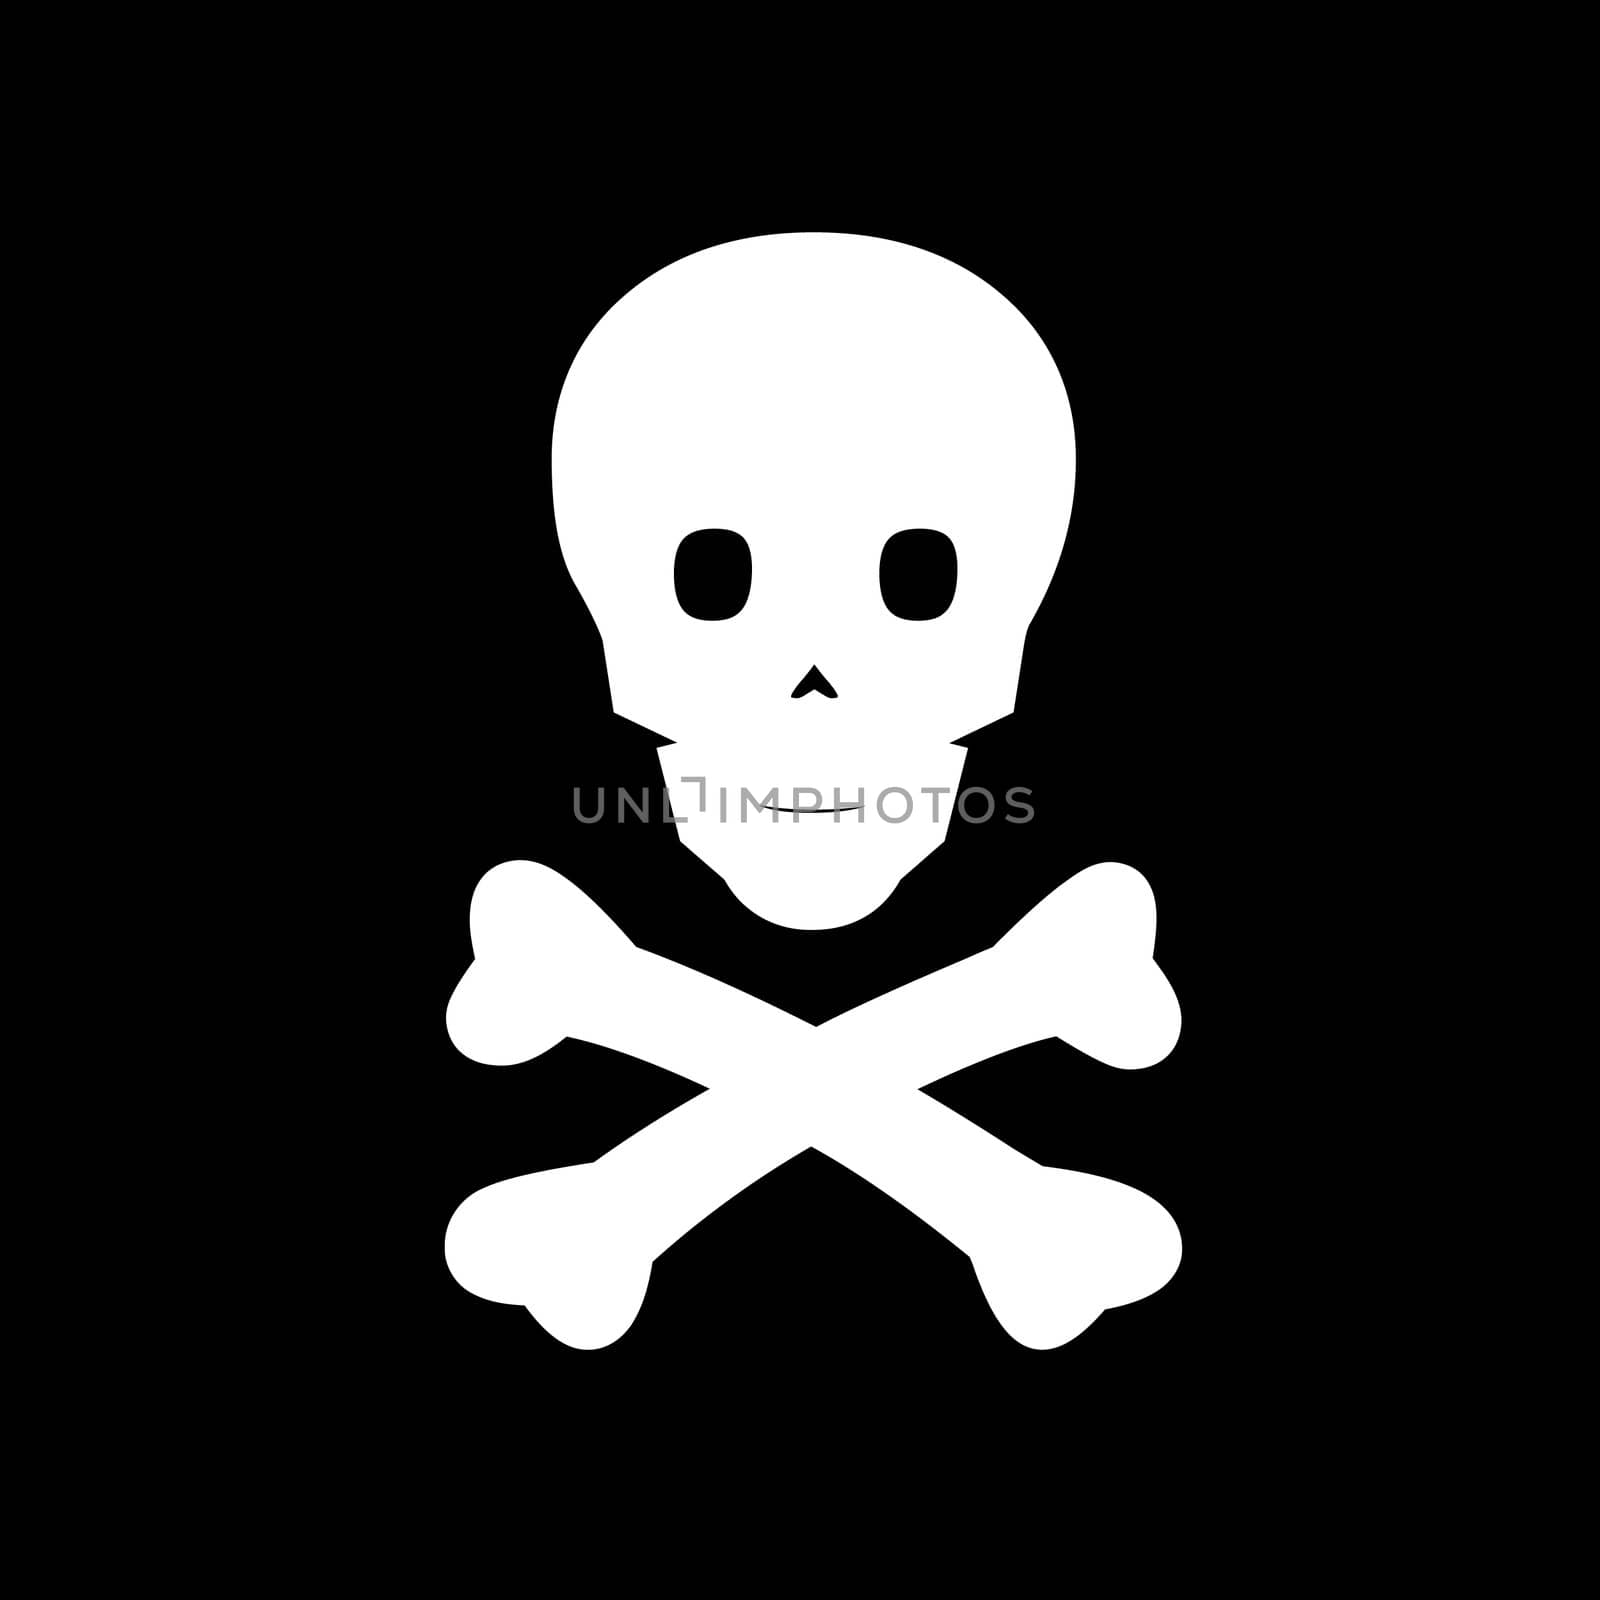 Pirate Emblem by Georgios